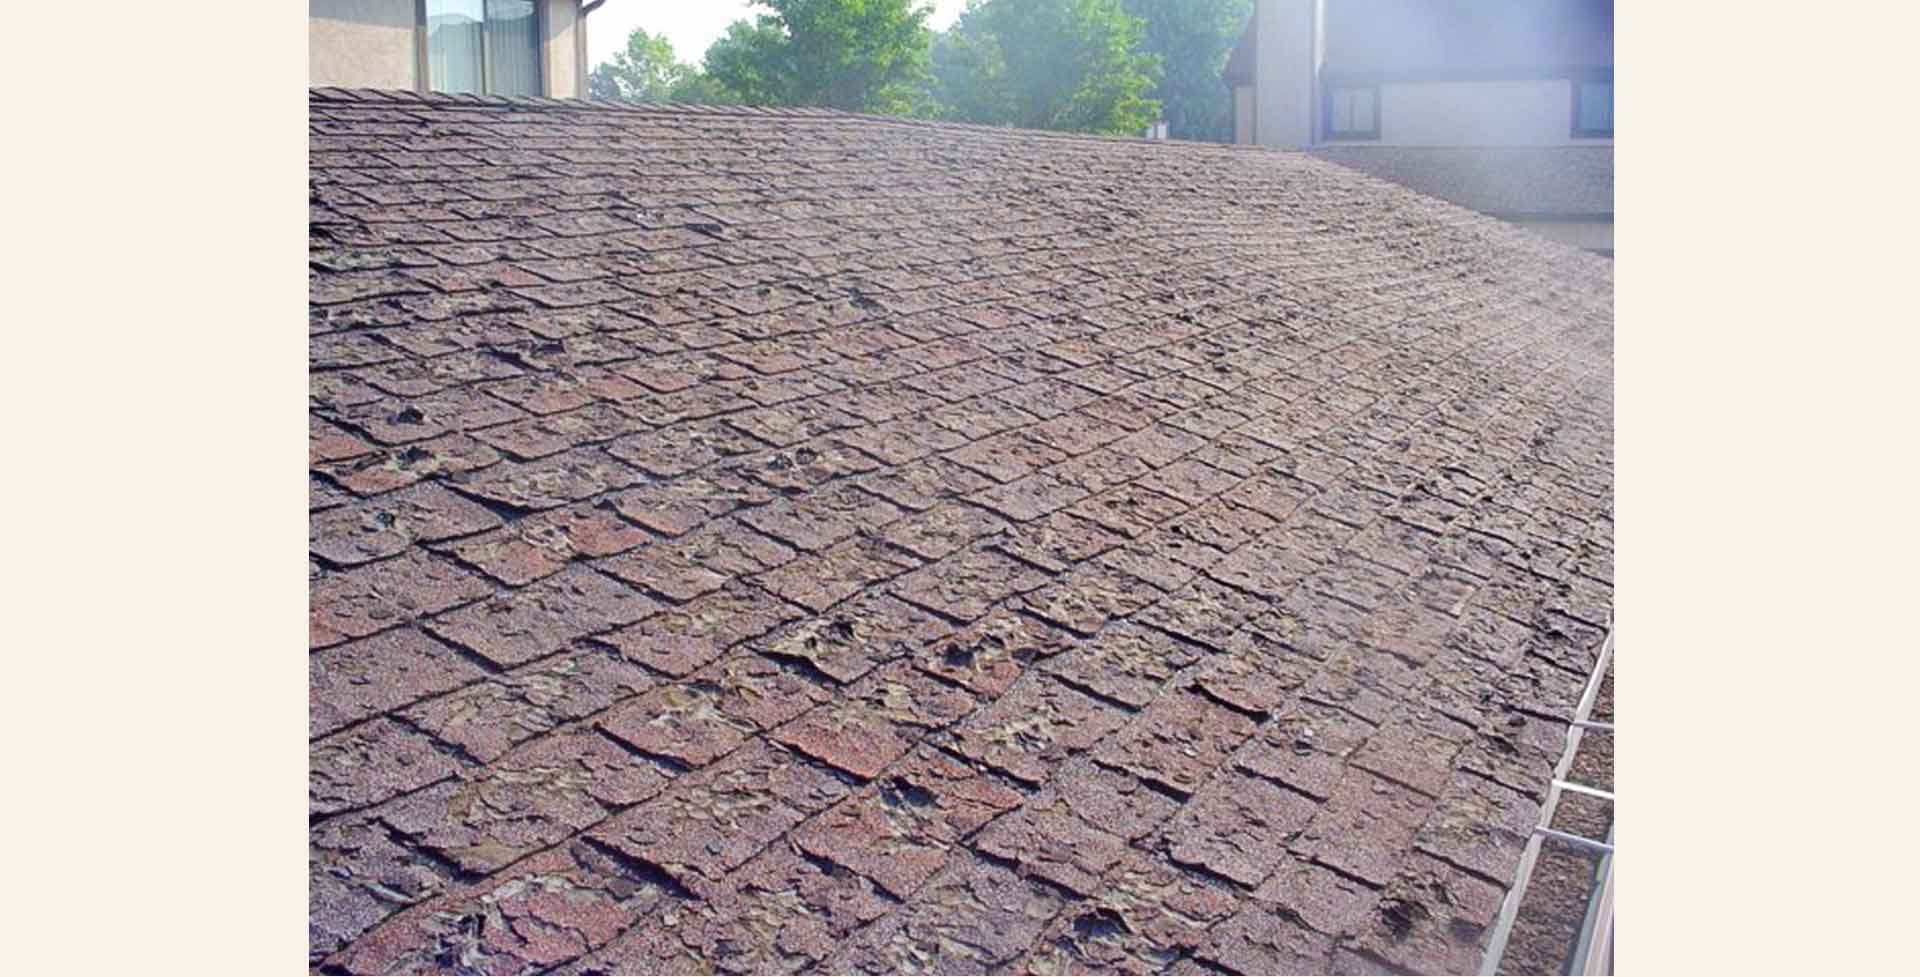 Roof with shingles peeling